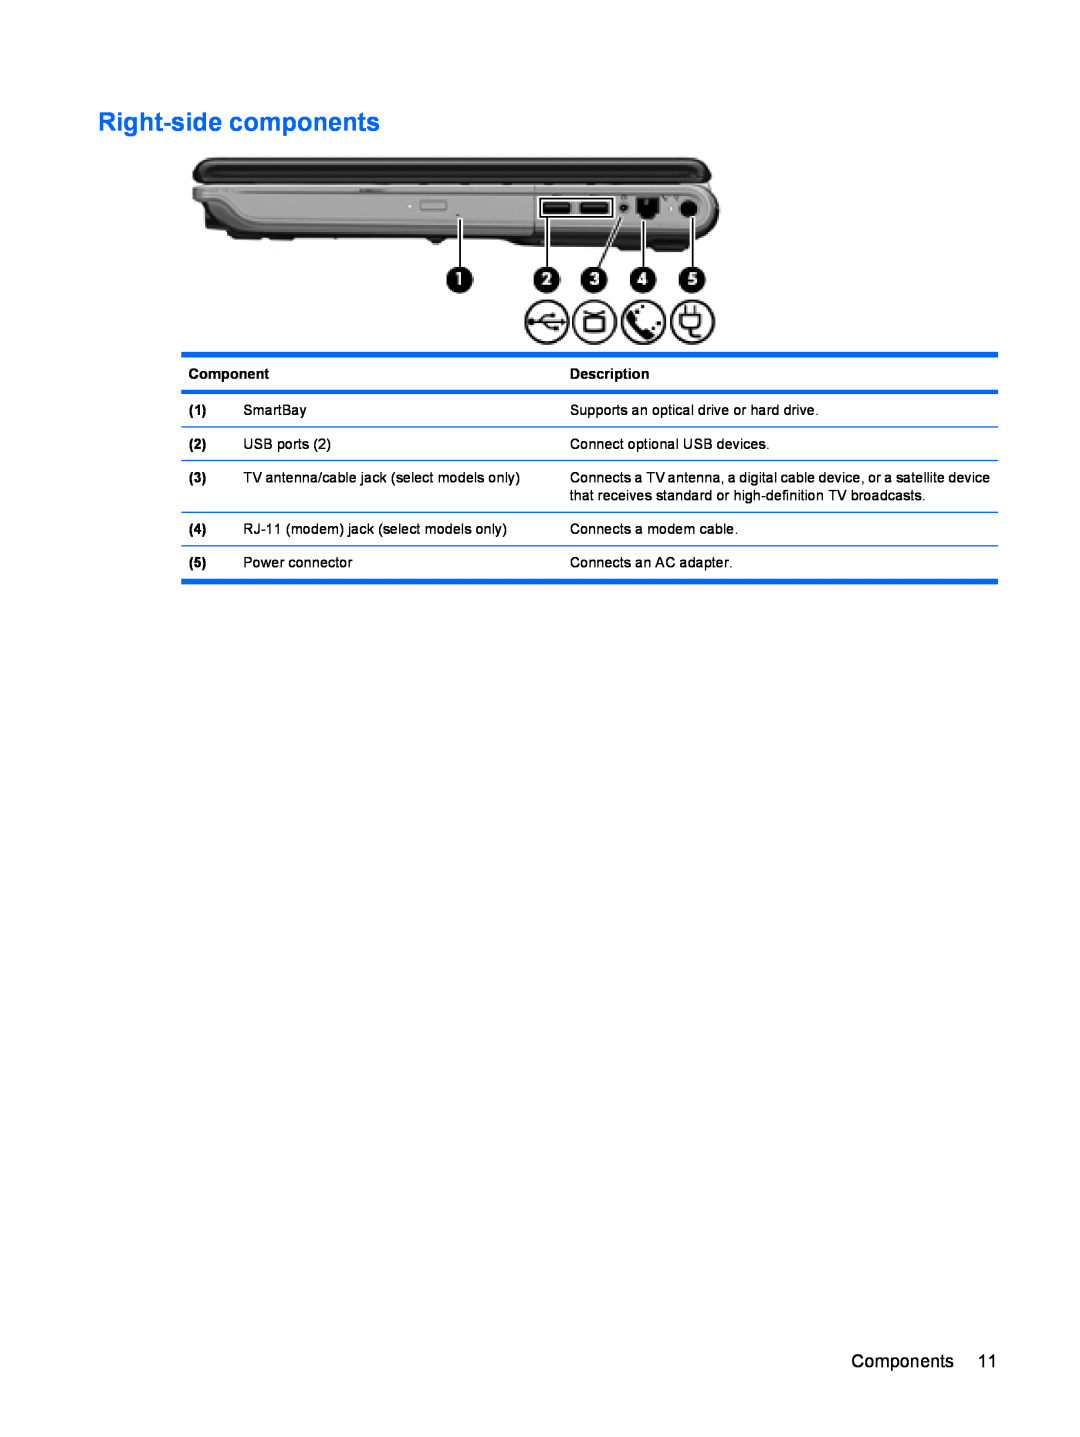 HP dv4-2160us manual Right-side components, Component, Description 